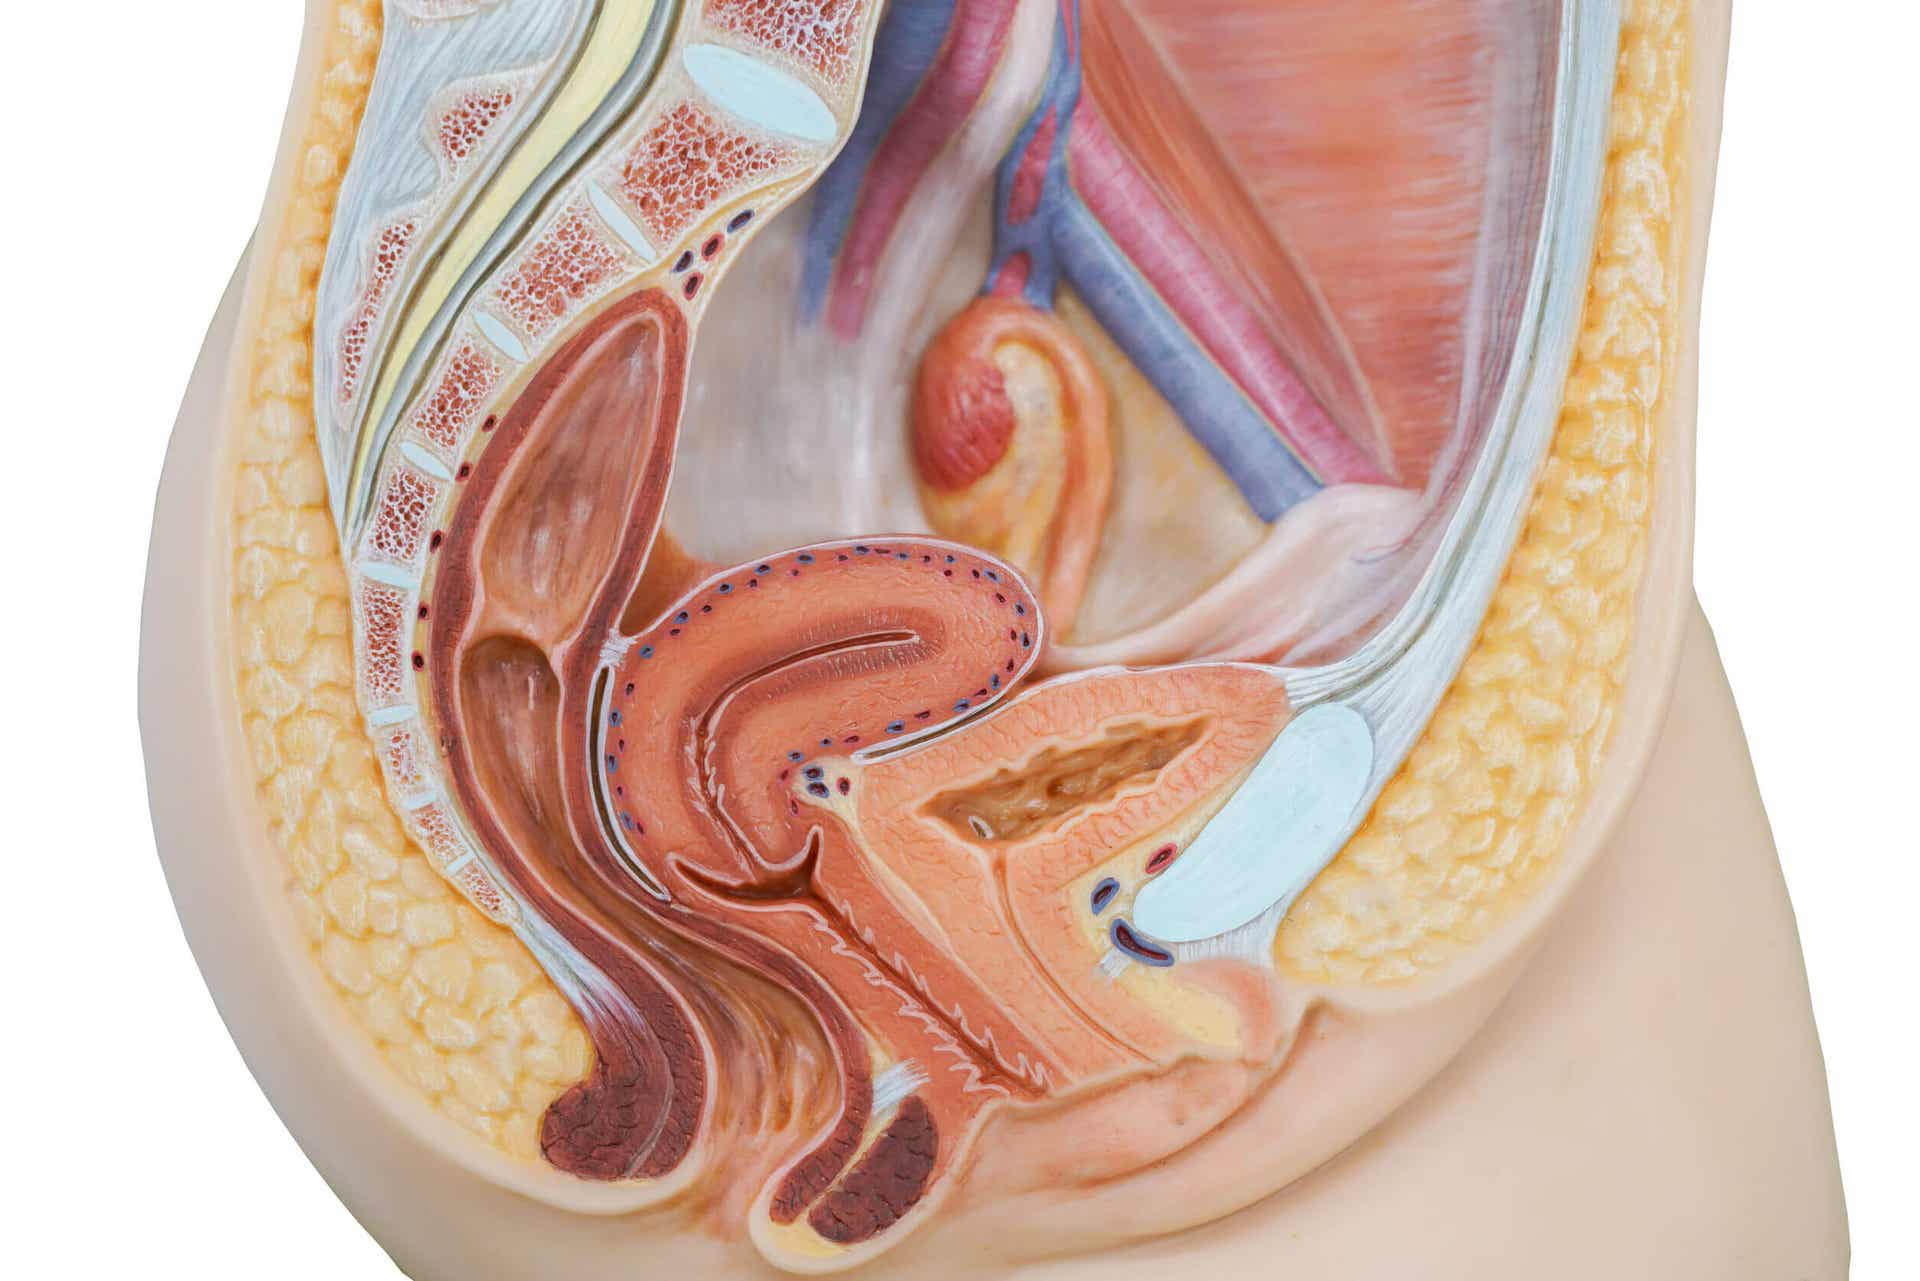 El aparato reproductor femenino está formado por órganos e internos.